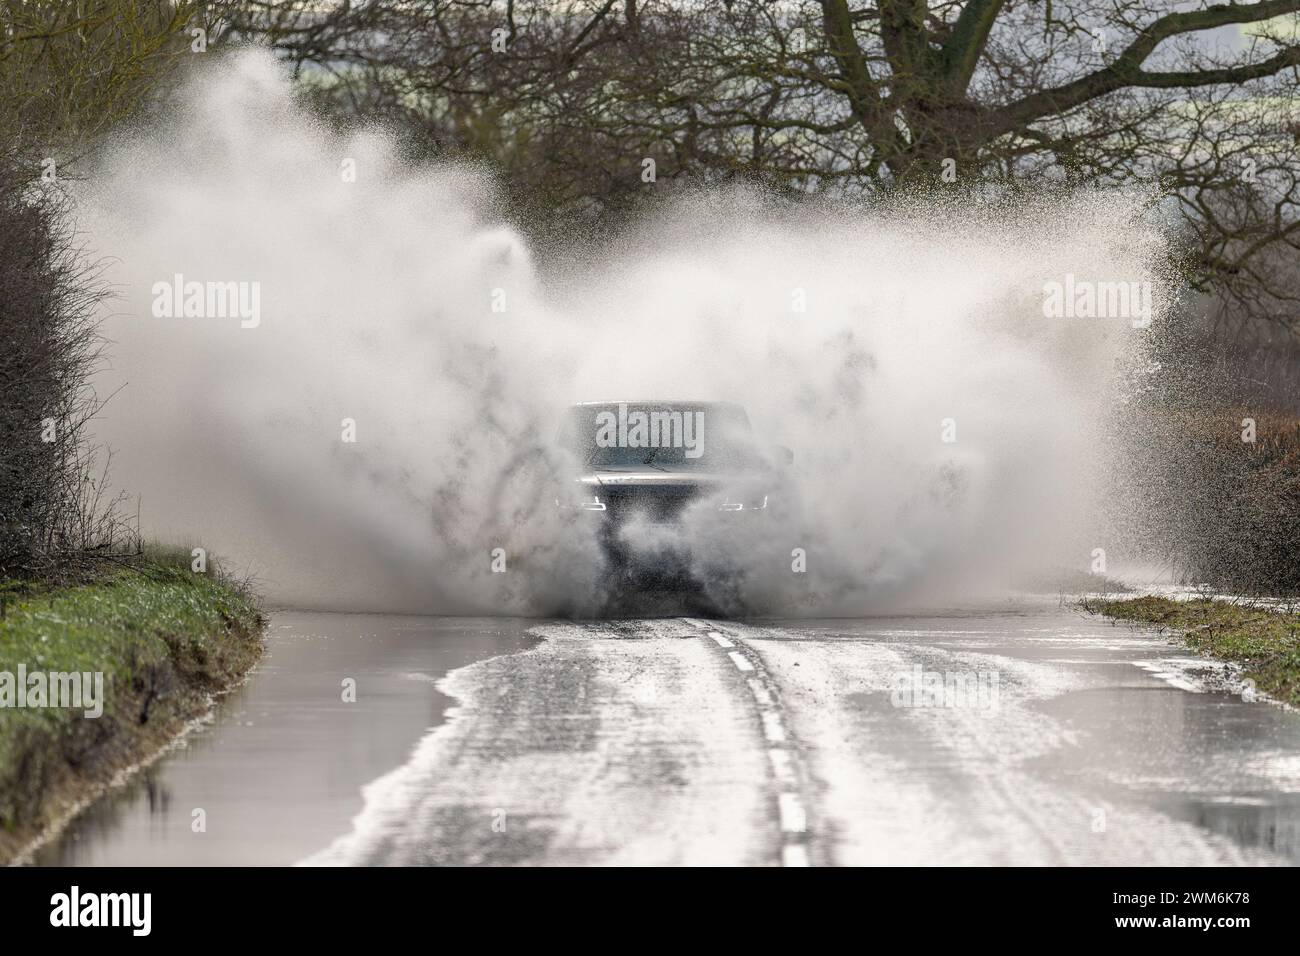 Range Rover driving through water Stock Photo